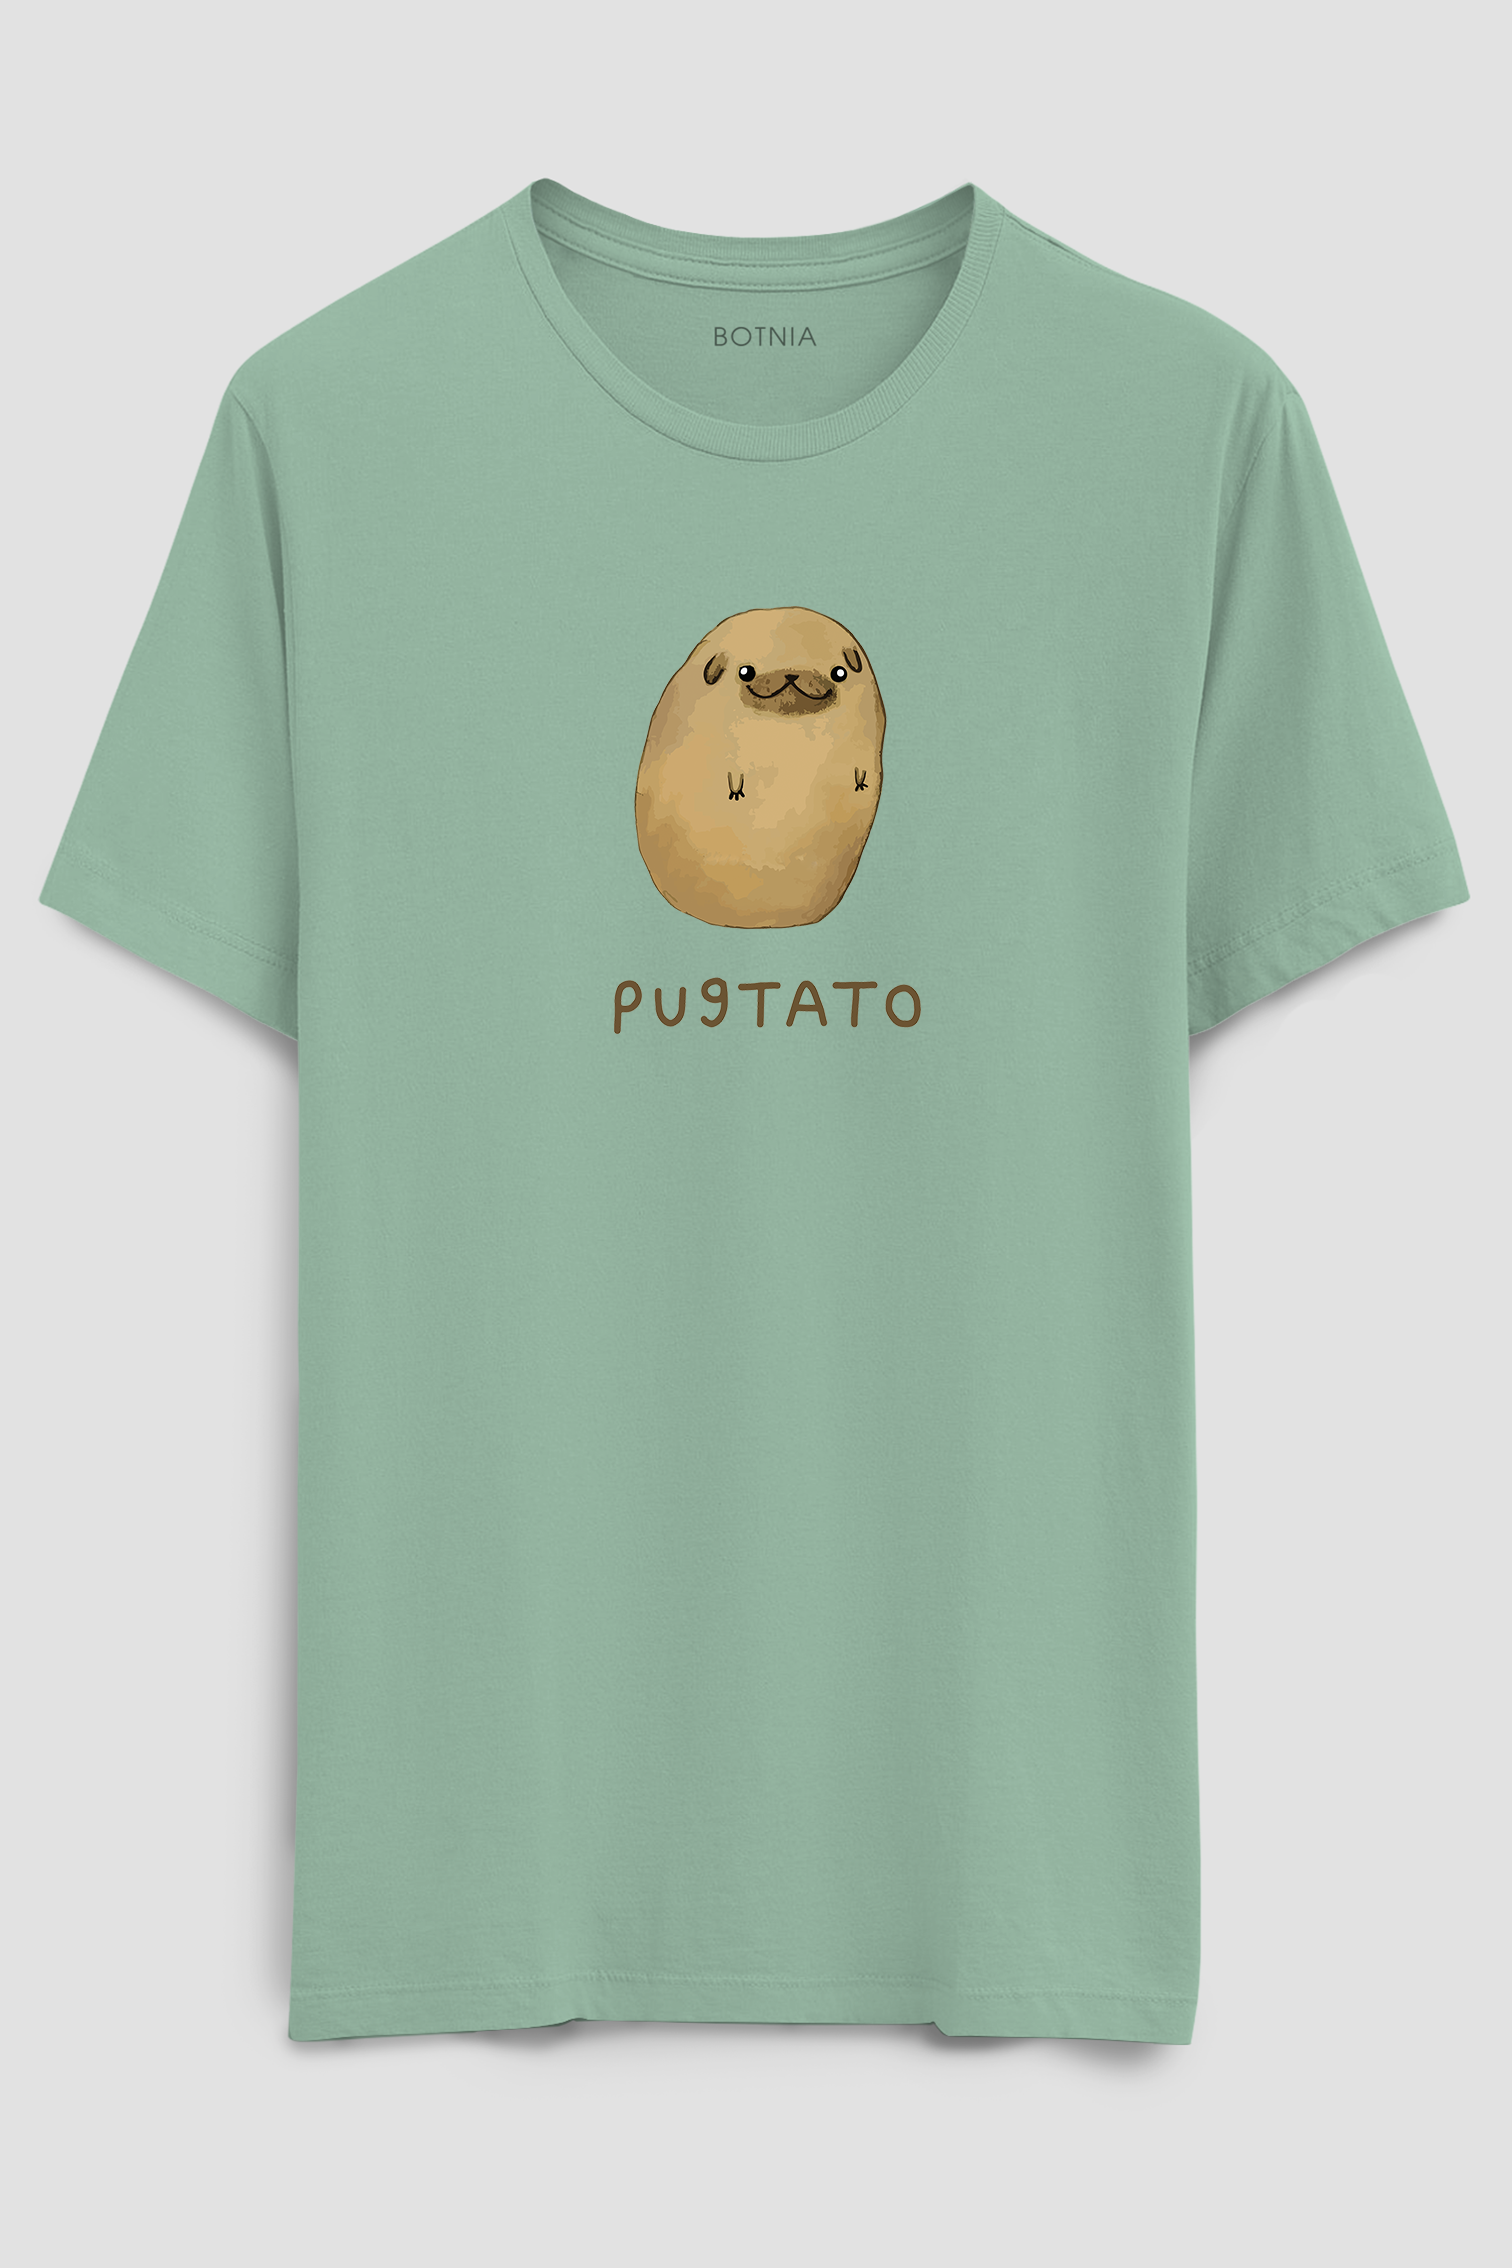 Pugtato- Half sleeve t-shirt